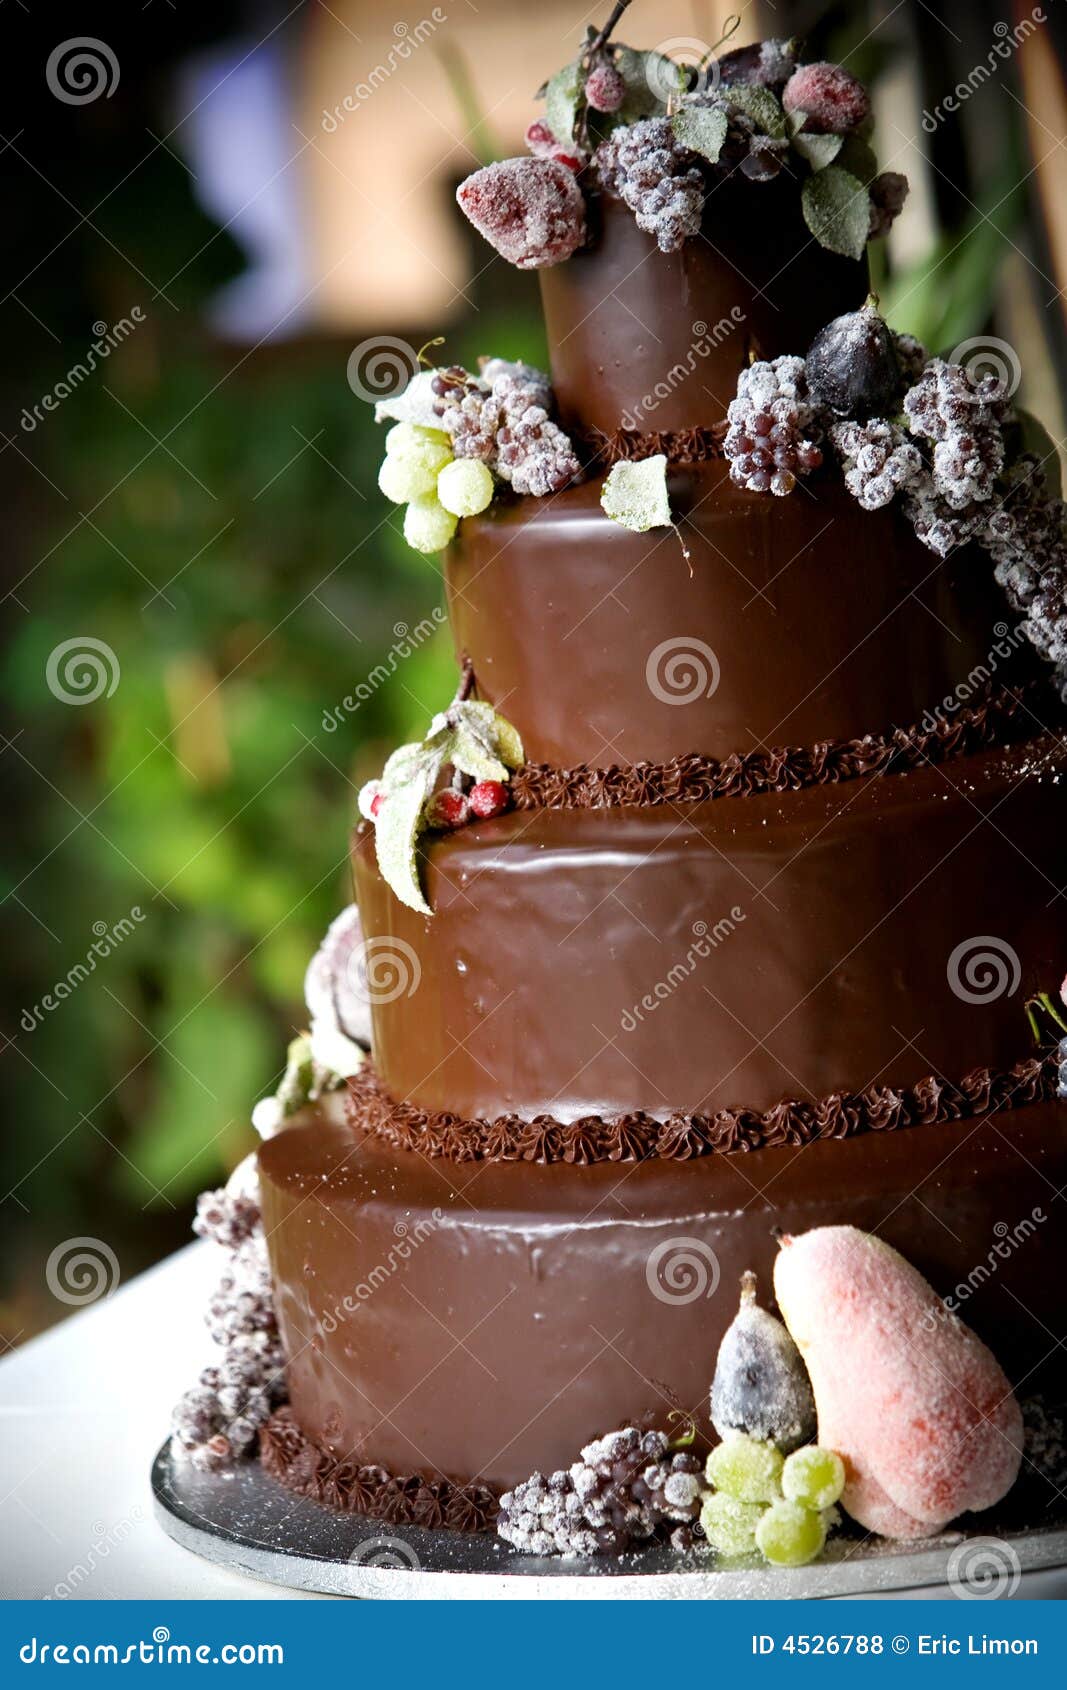 Details more than 120 chocolate big birthday cake latest - kidsdream.edu.vn